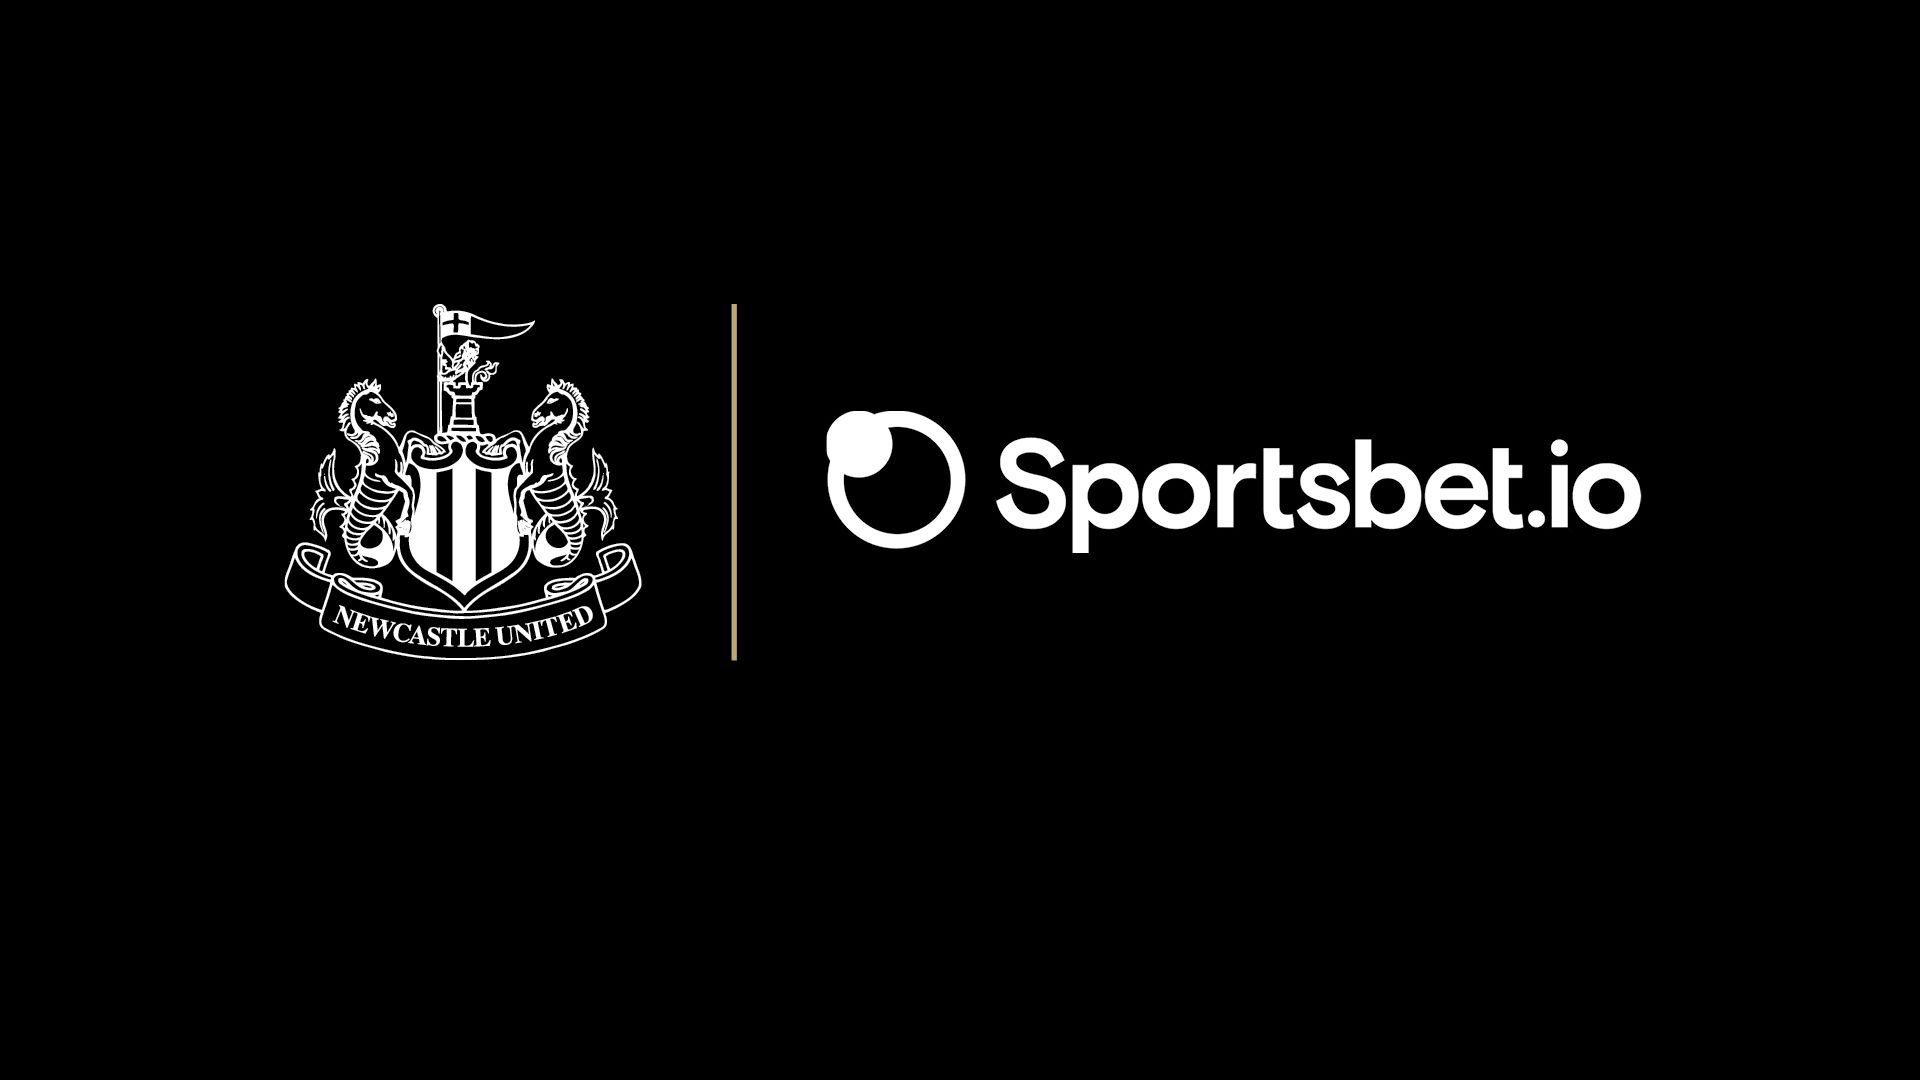 Newcastle United welcomes Sportsbet.io as new club partner